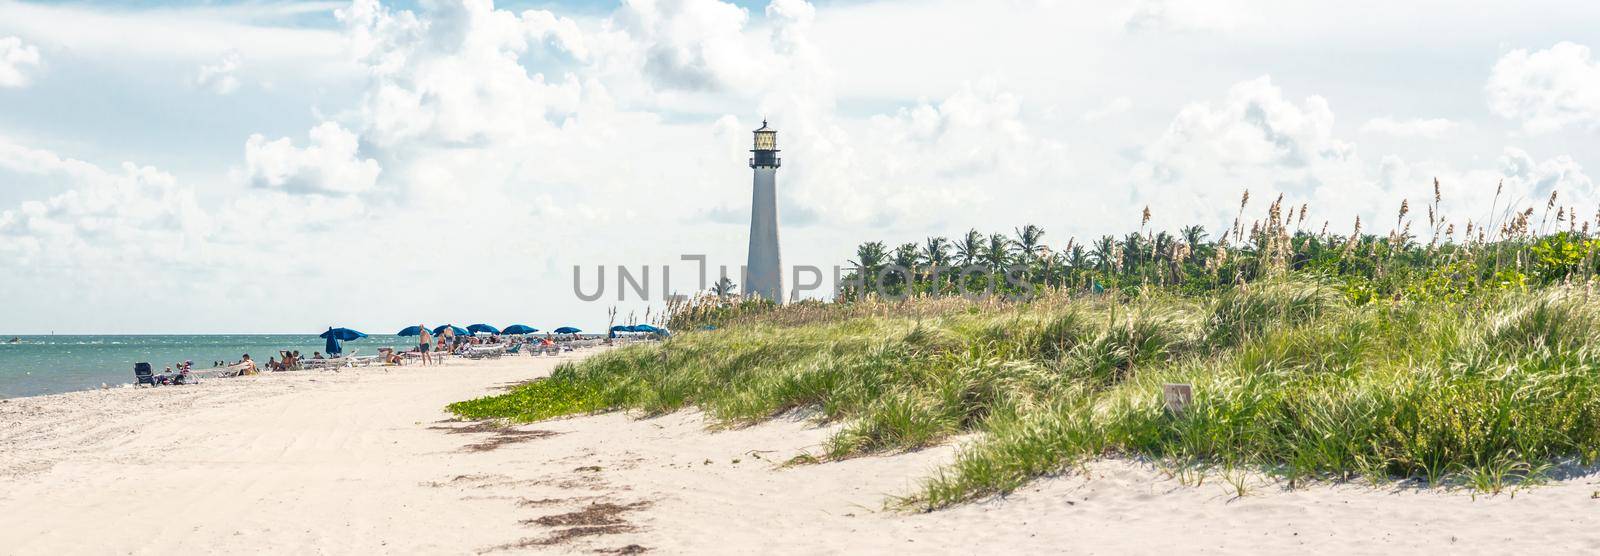 Miami, USA - September 11, 2019: Cape Florida Lighthouse, Key Biscayne, Miami, Florida, USA by Mariakray